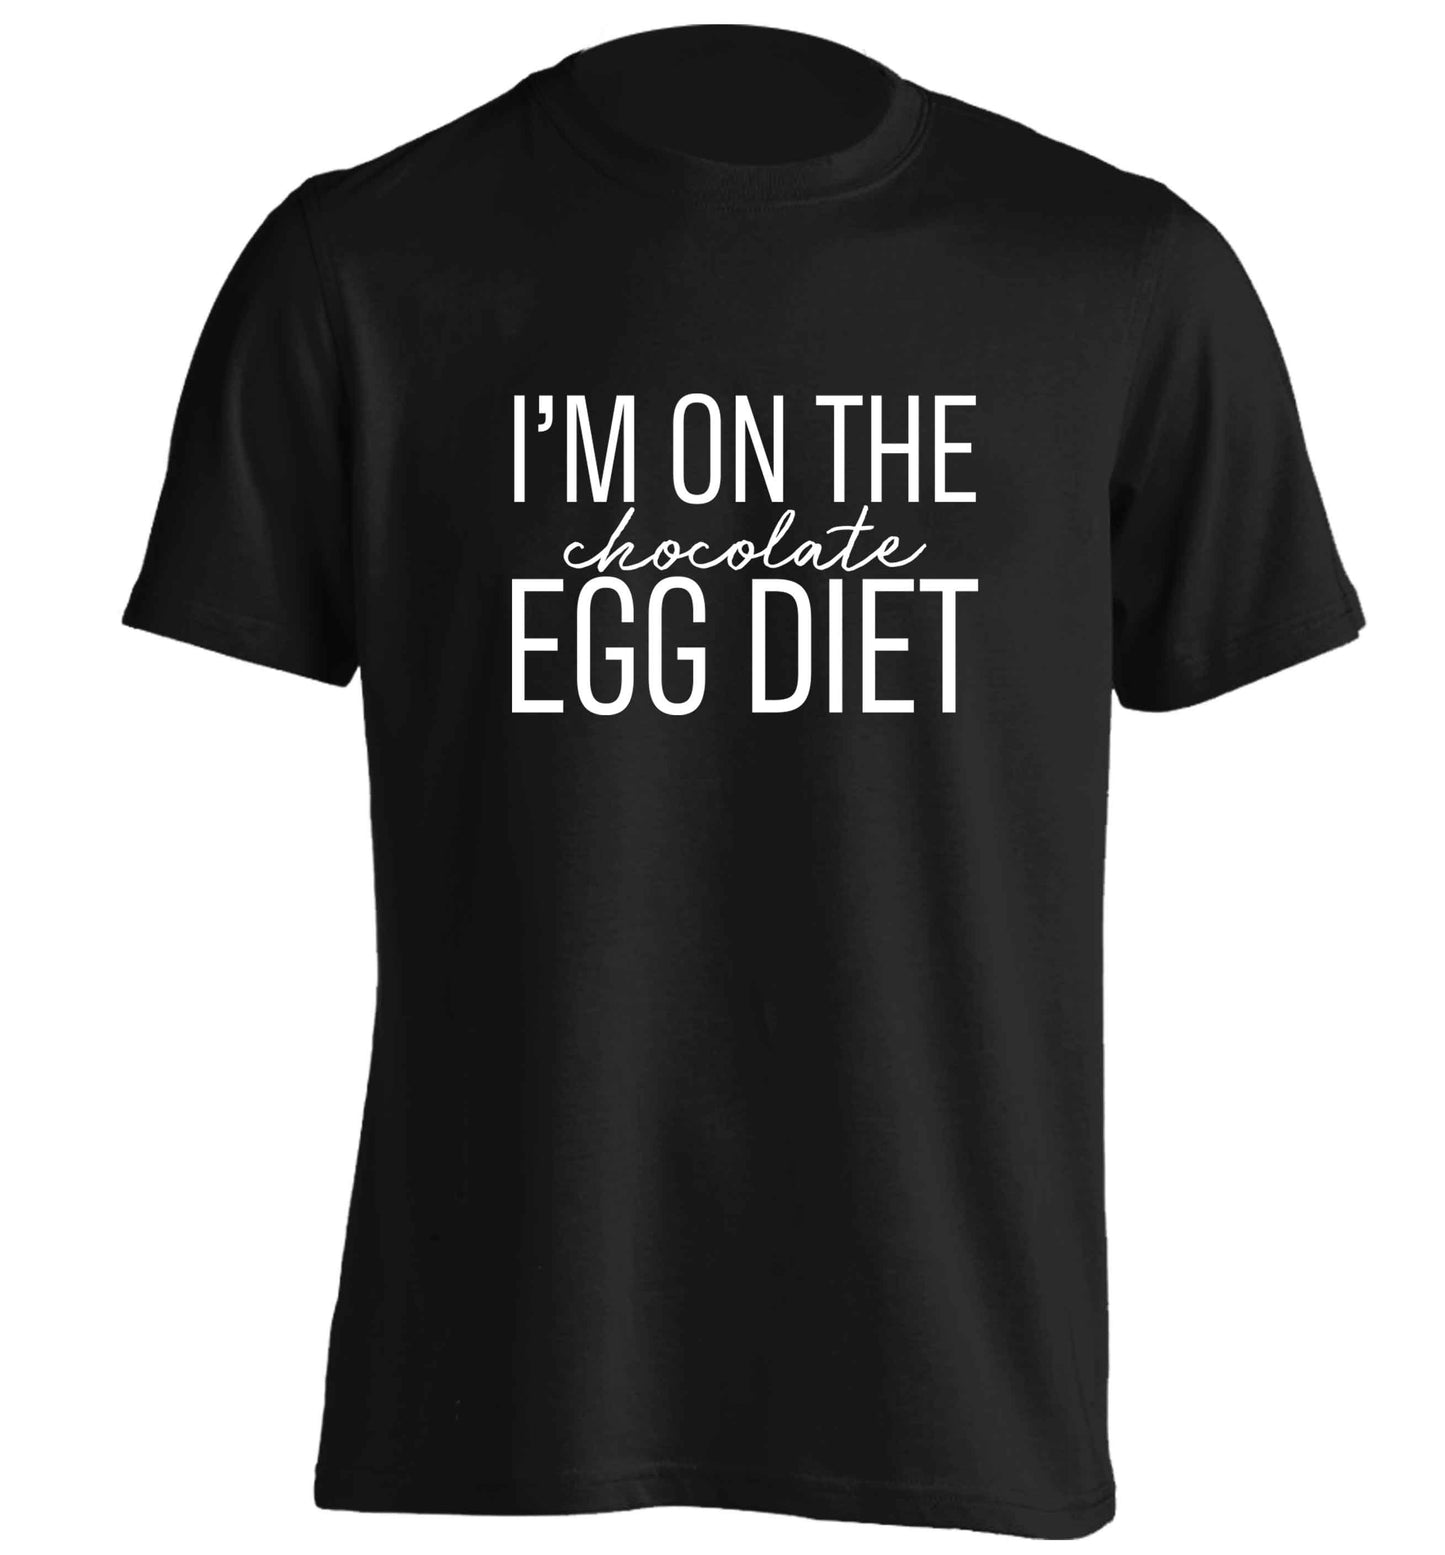 I'm on the chocolate egg diet adults unisex black Tshirt 2XL